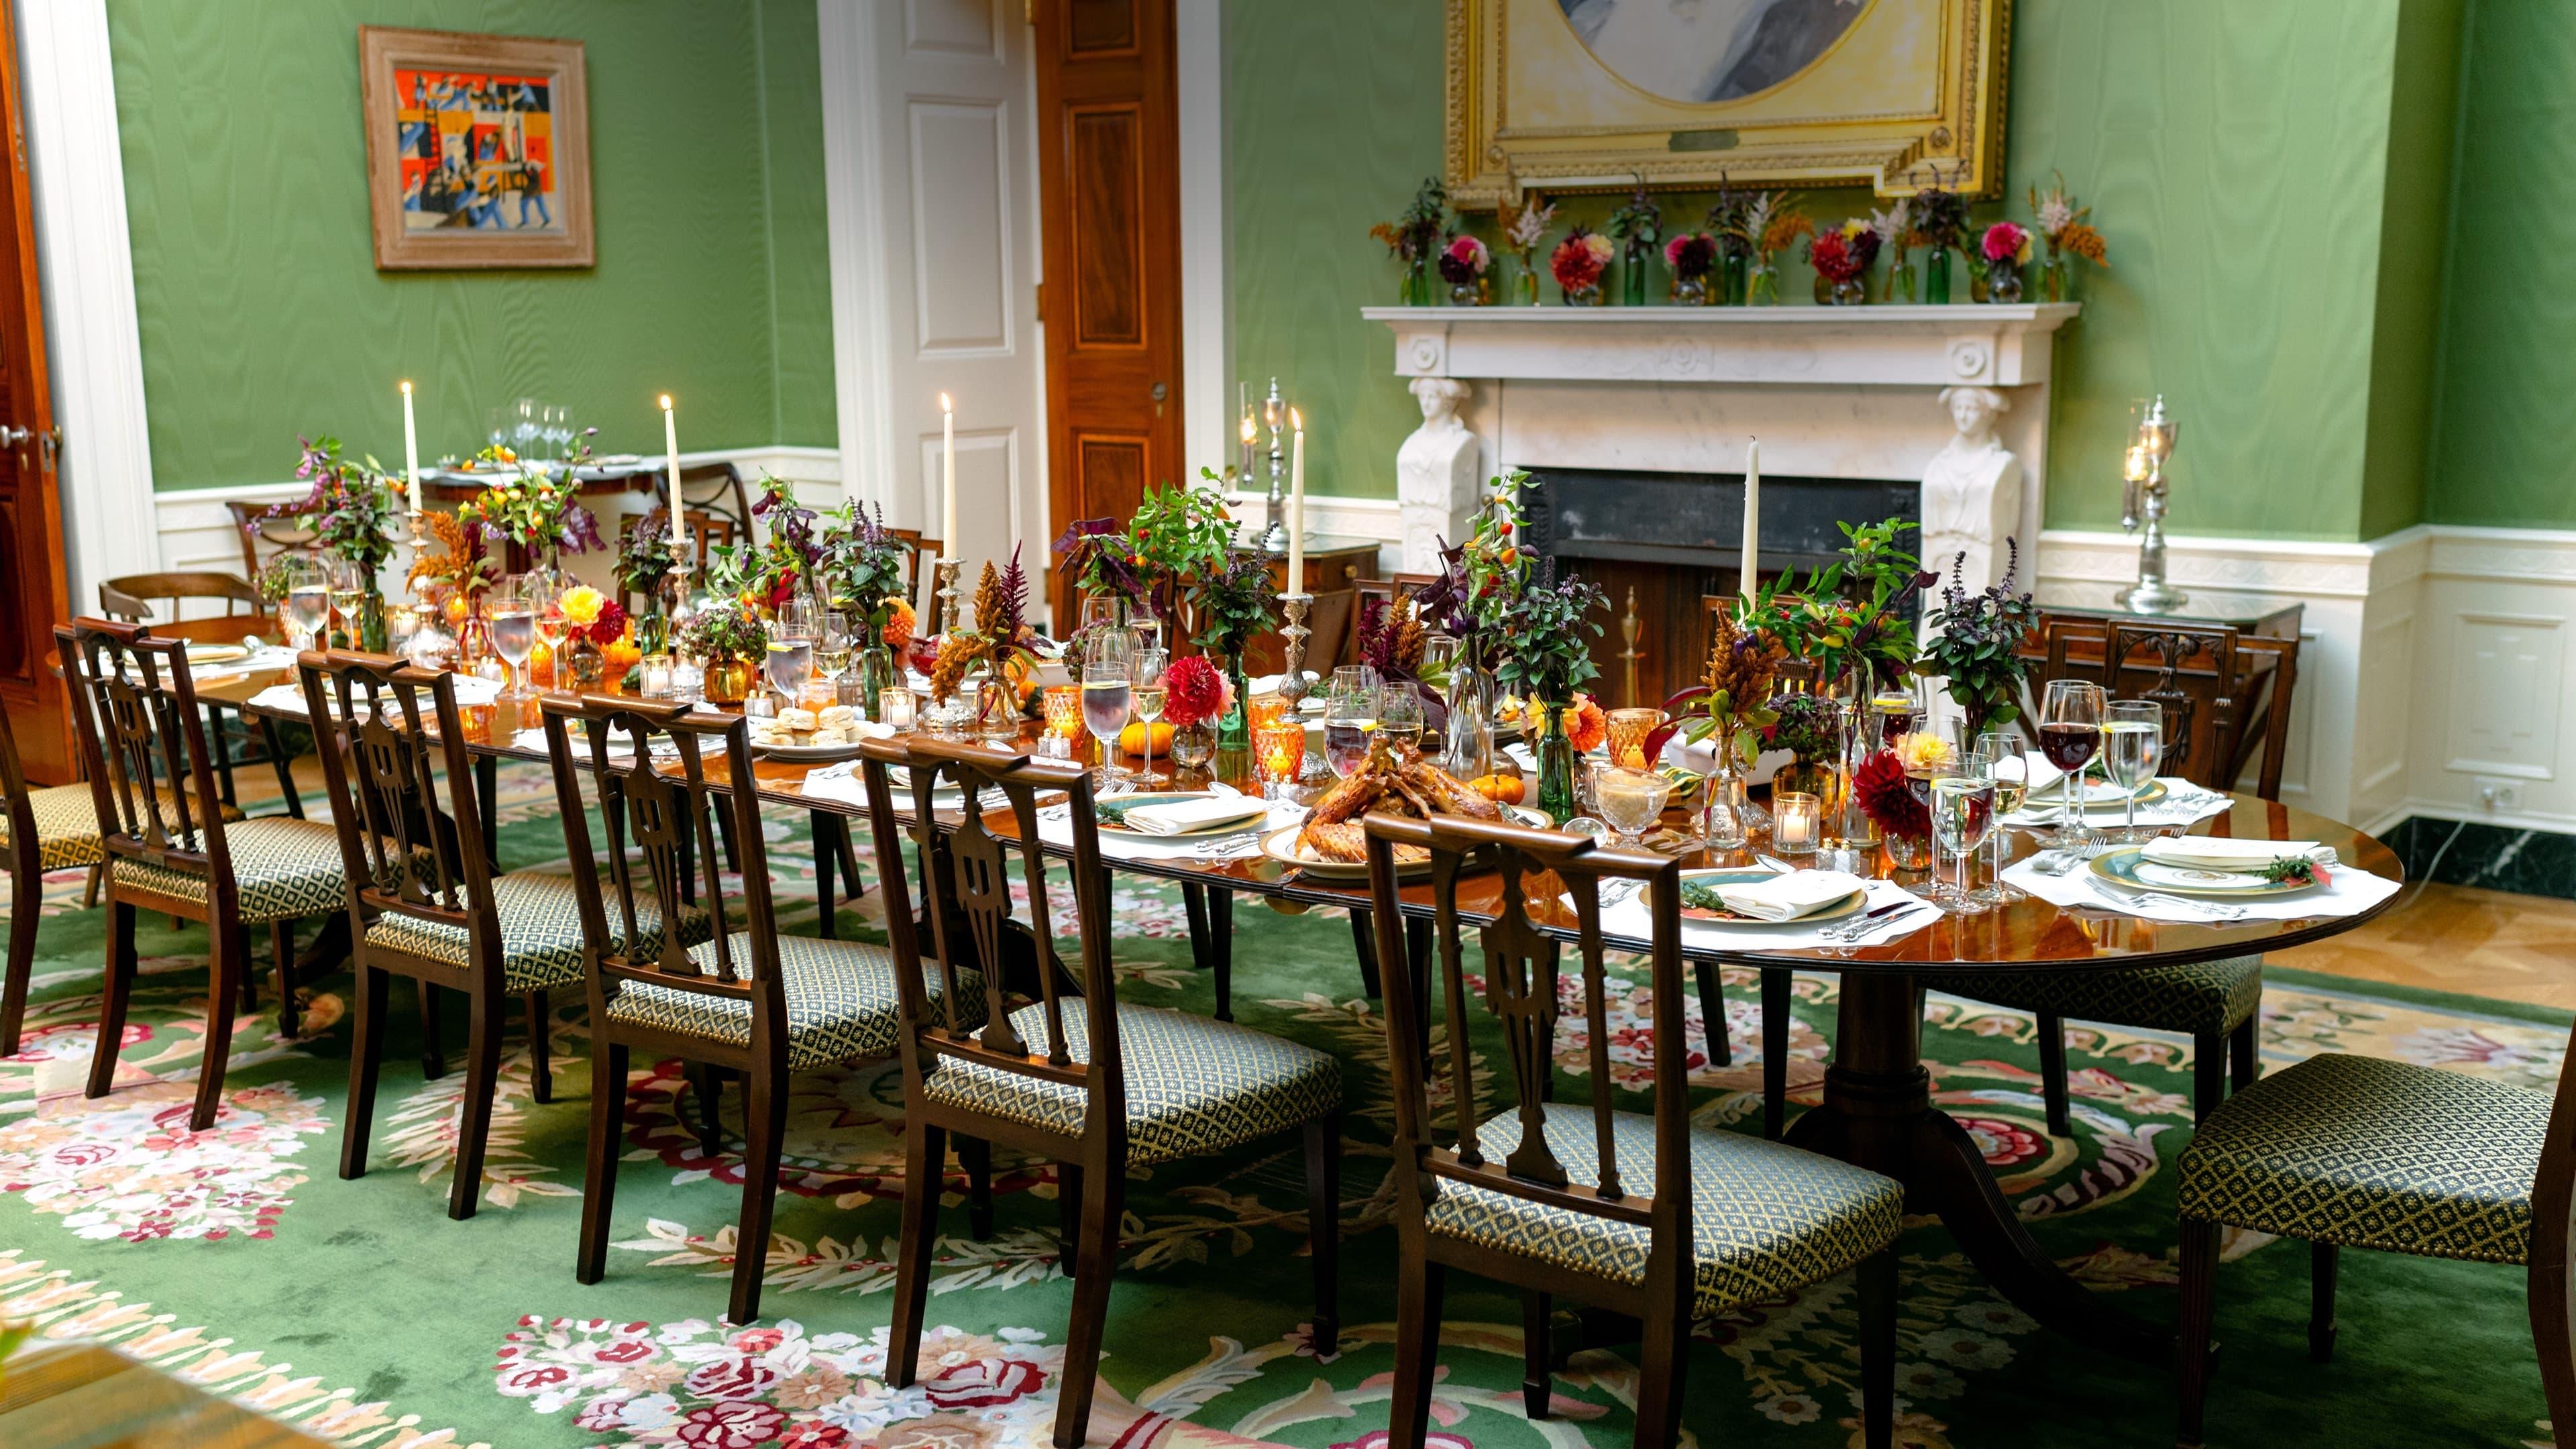 A White House Thanksgiving backdrop